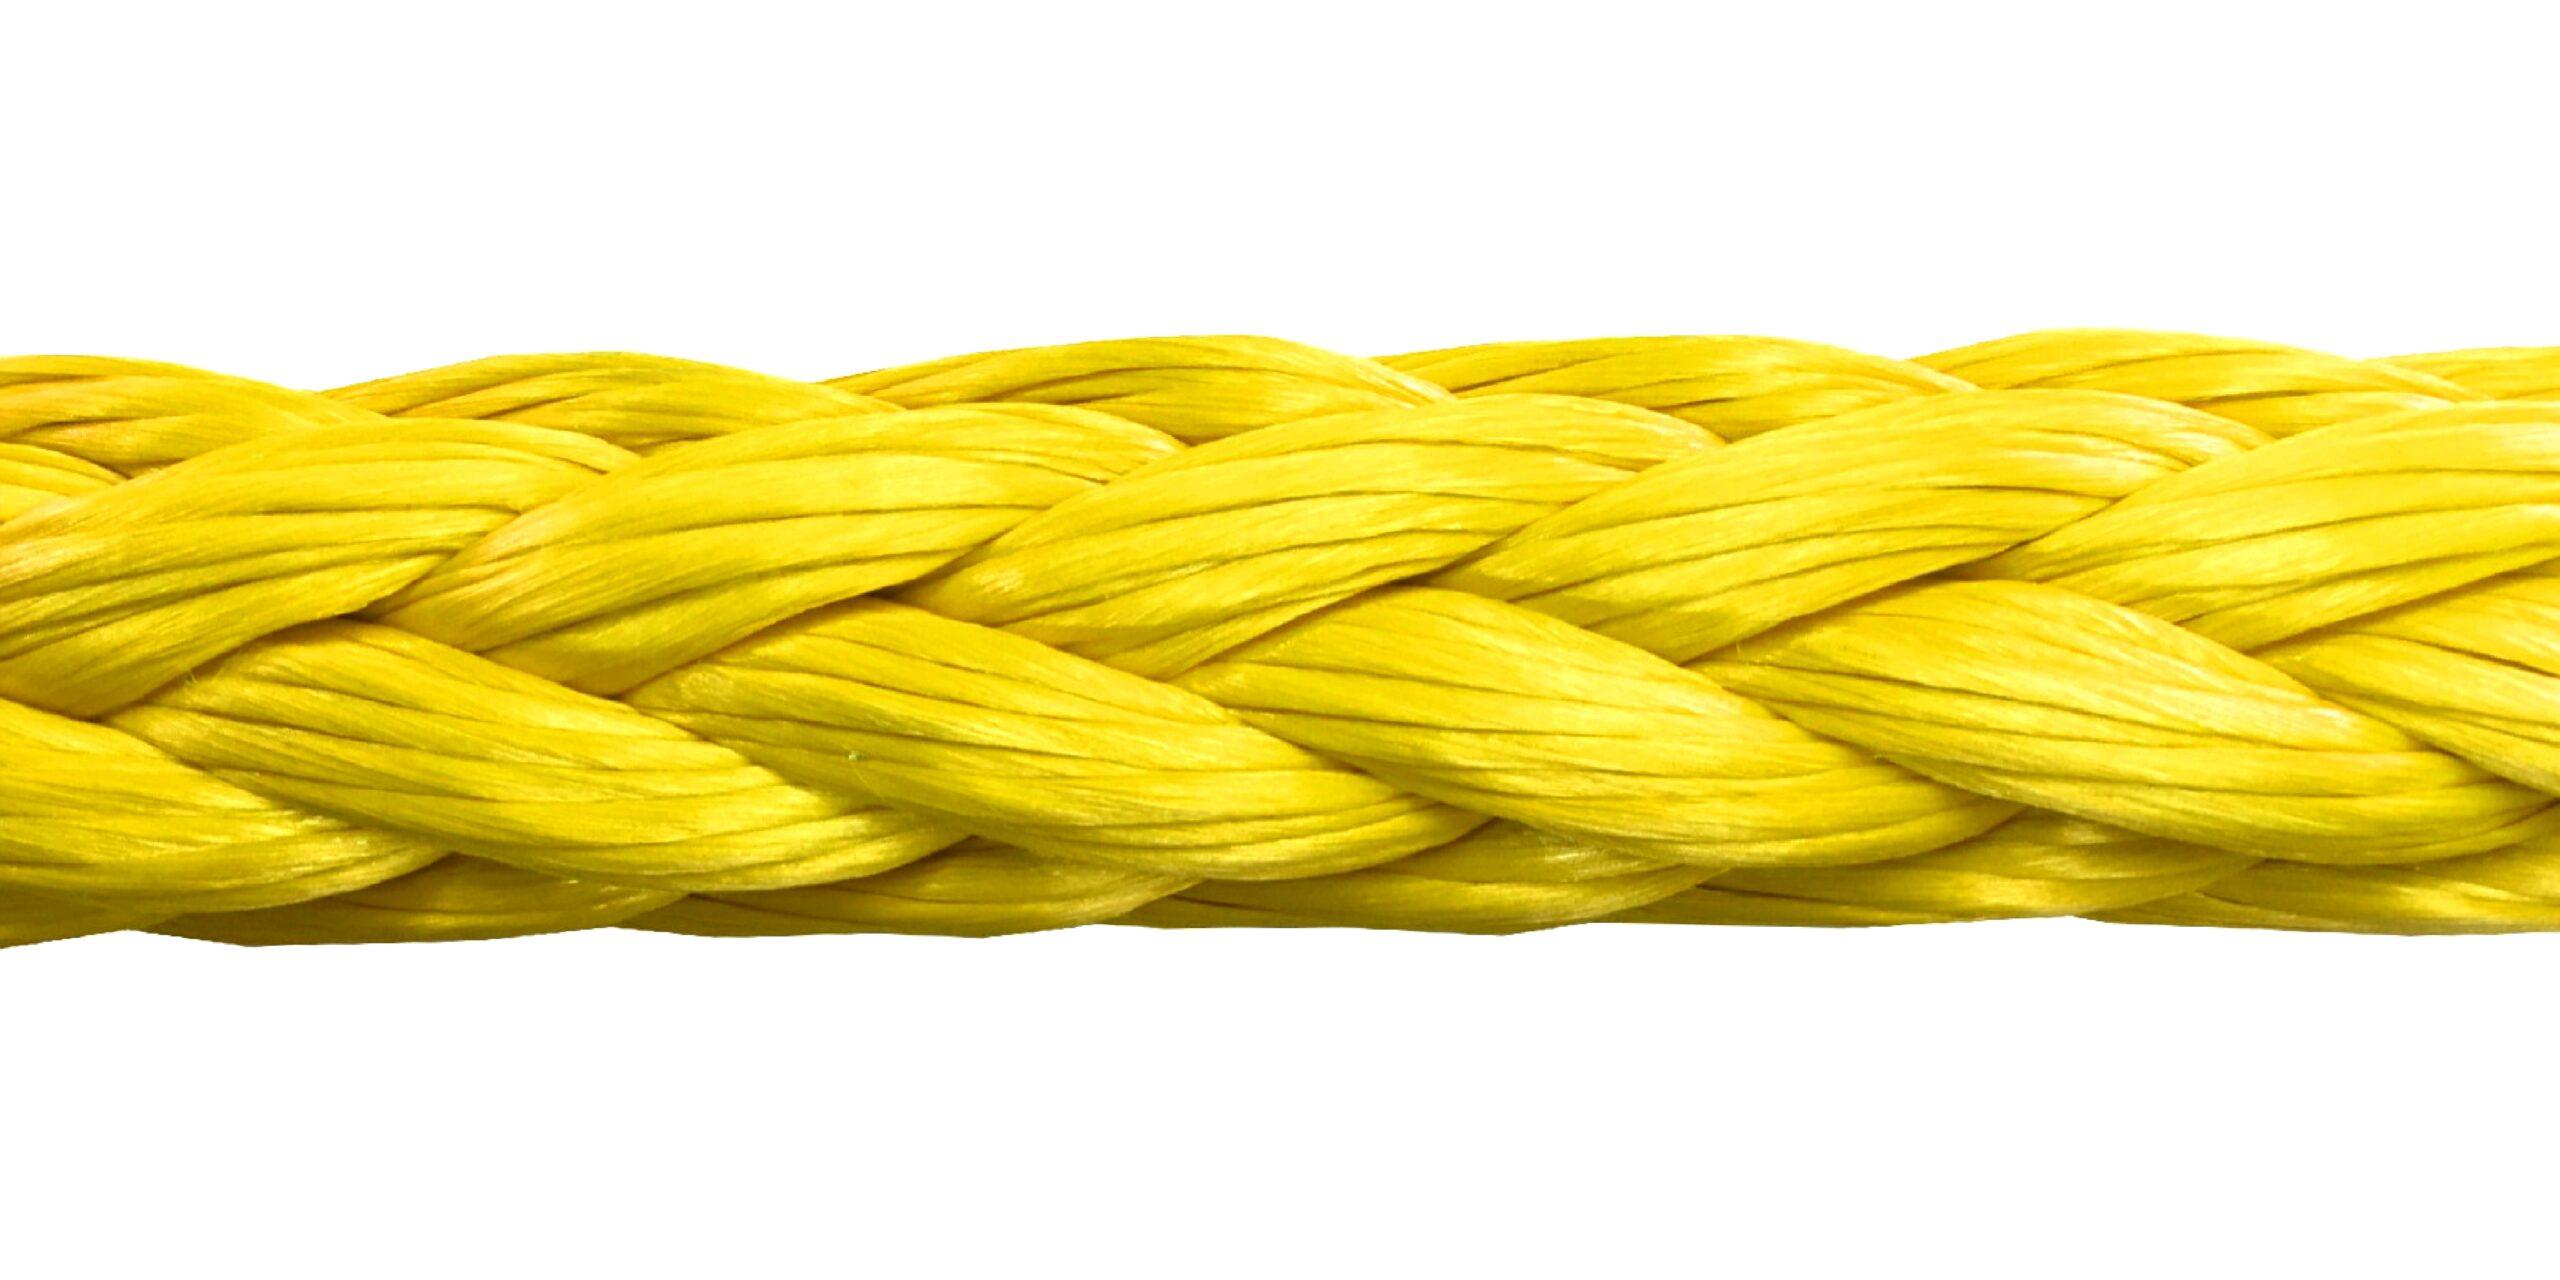 images-mooring-ropes-polypropynene-8-strand-ropes-kavos-sxoinia-marine-ropes-high-quality-ropes-sxoina-cyprus-tessaloniki-alaxandroupoli-kriti-samos-santorini-synodinos-treccia-ropes